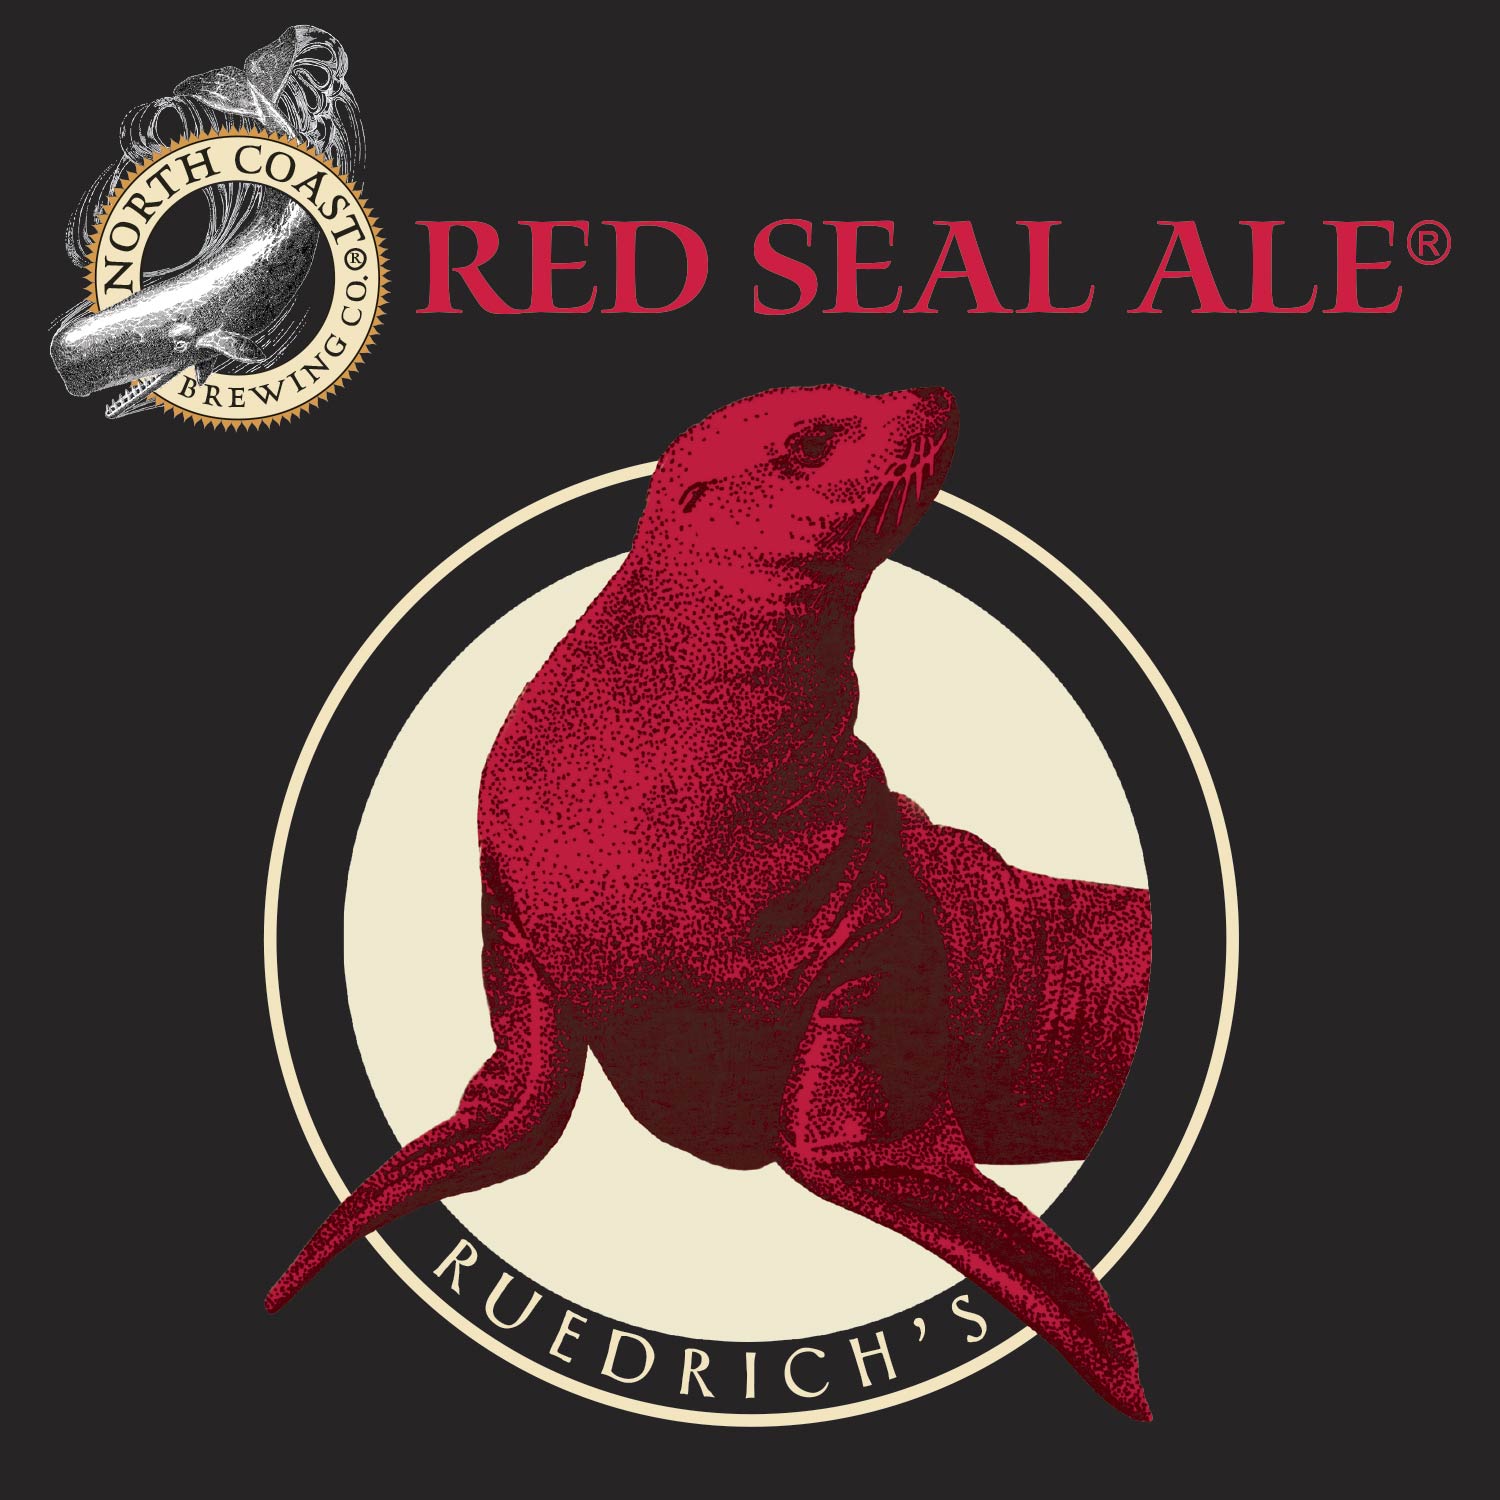 Ruedrich's Red Seal Ale